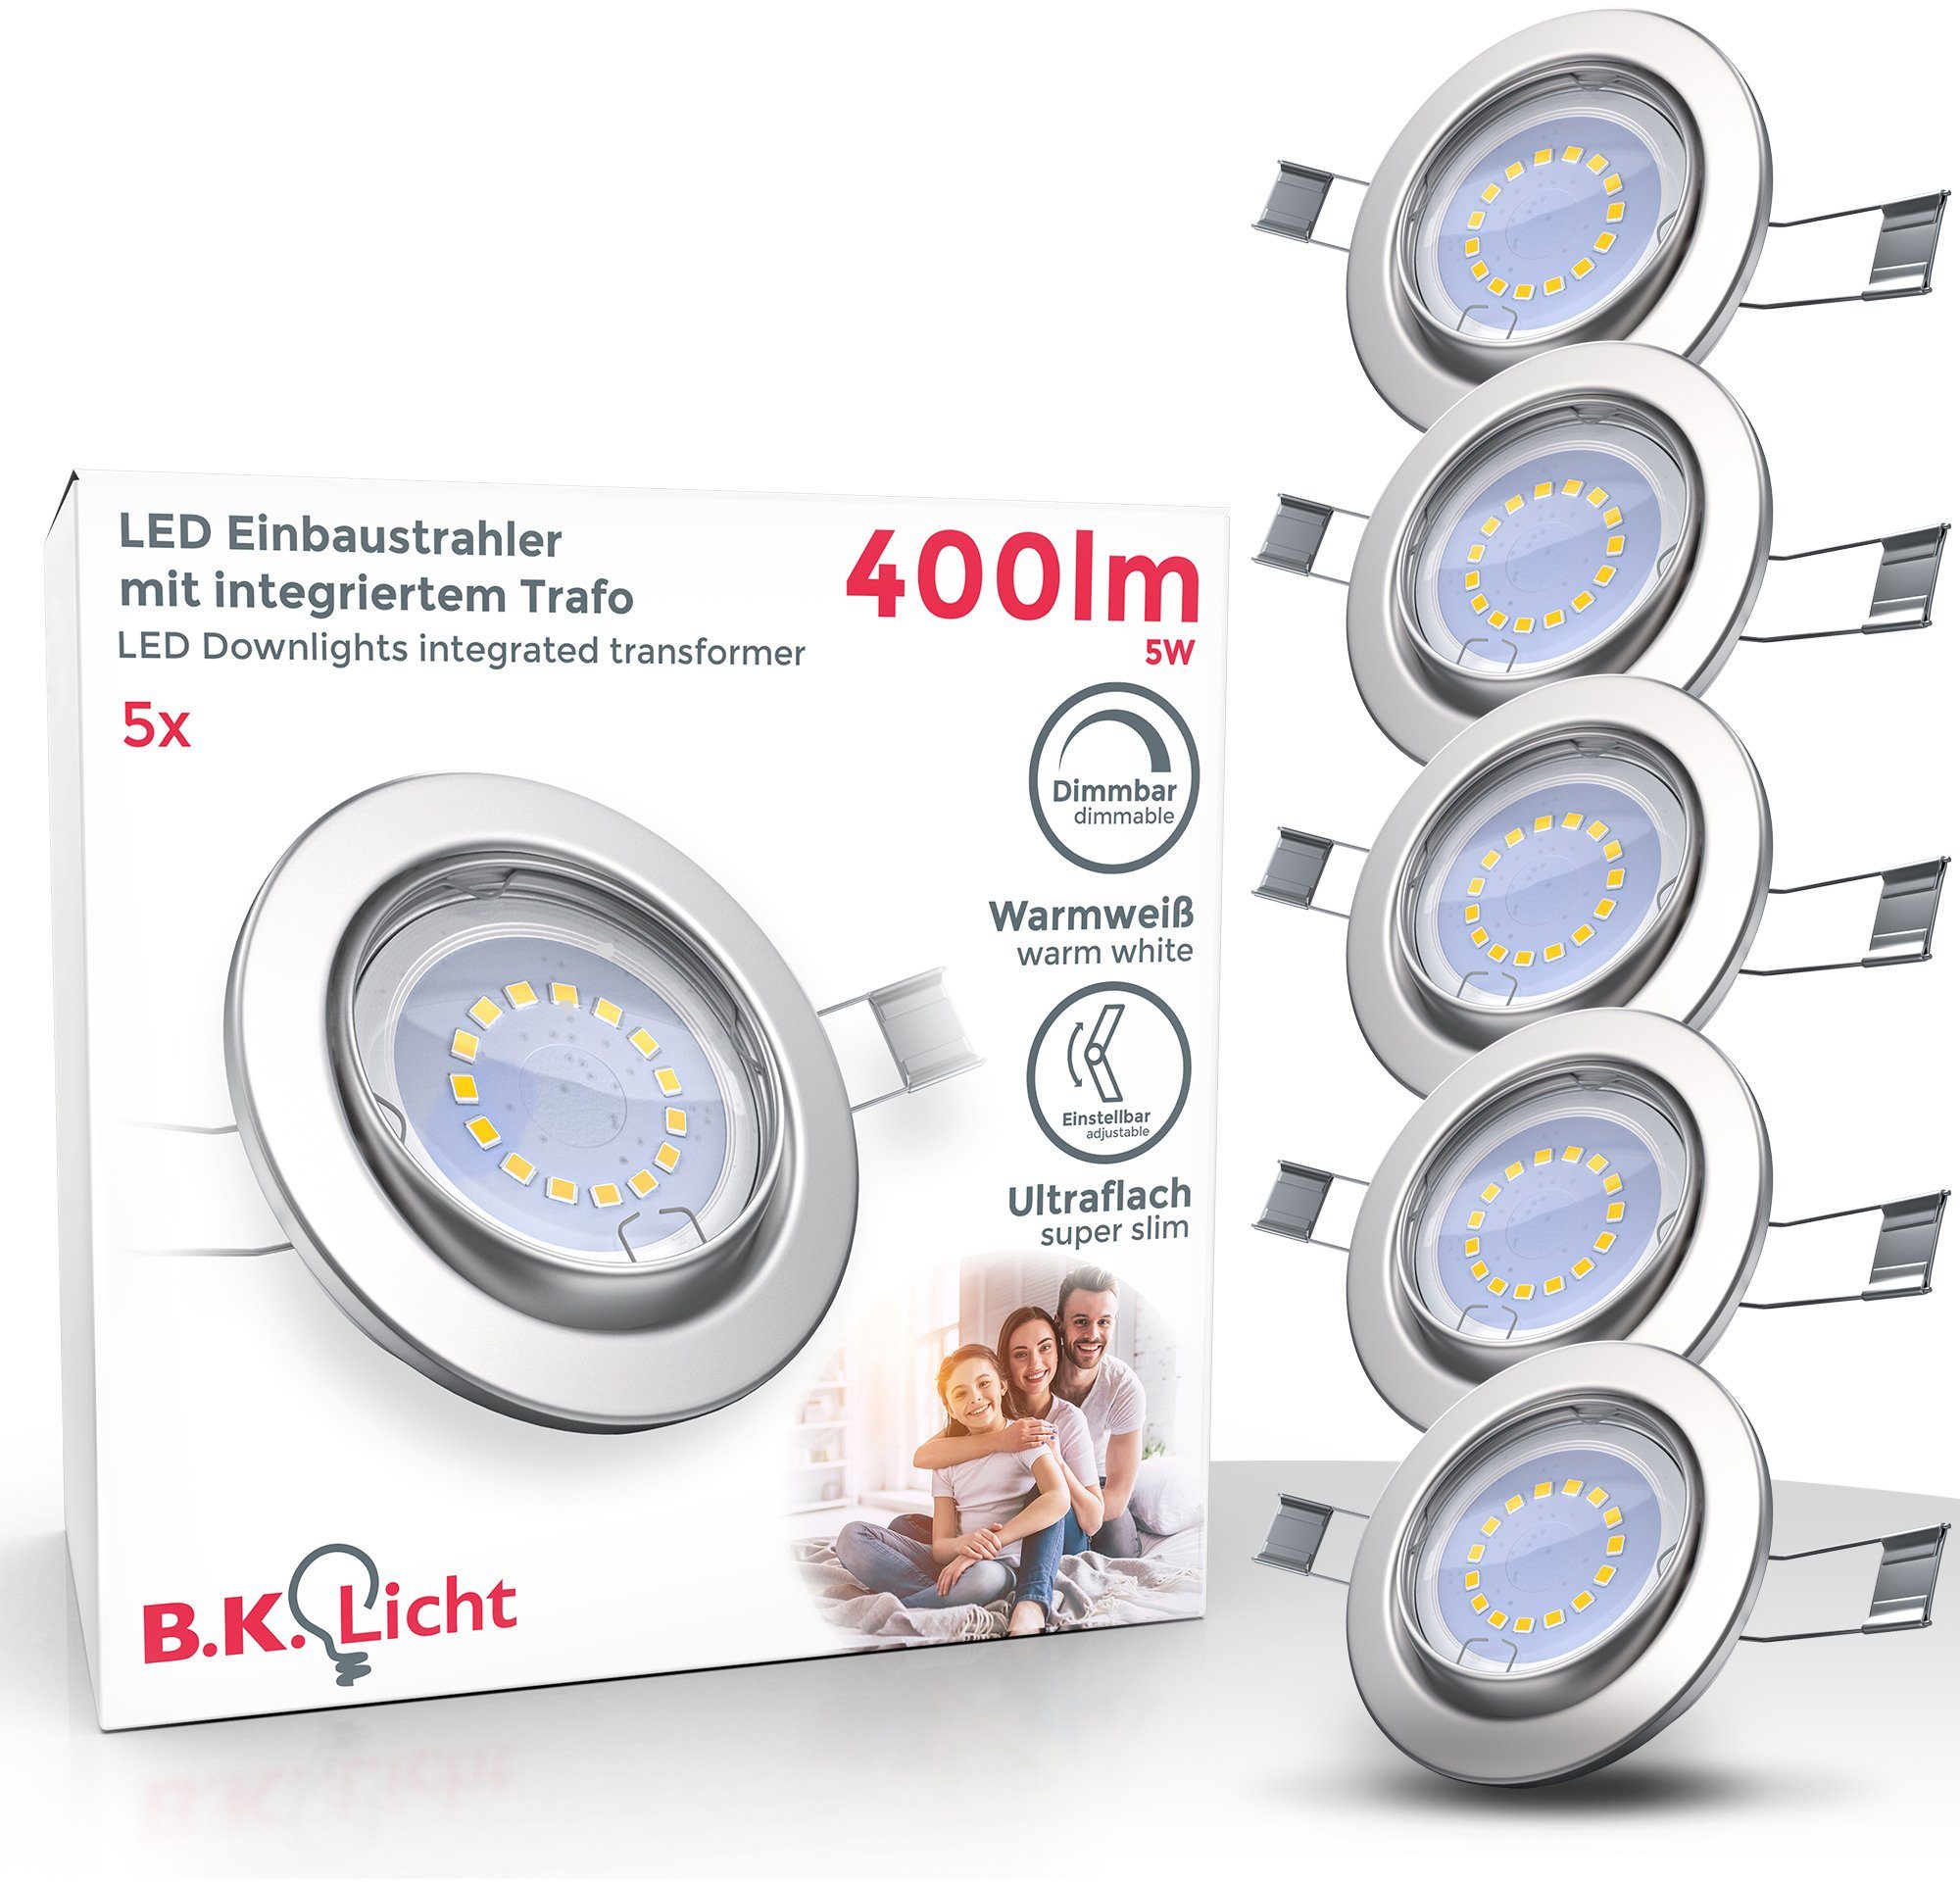 B.K.Licht LED Einbauleuchte, 5er Dimmer dimmbar, Warmweiß, LED ohne 5W 400lm inkl. Einbaustrahler, LED SET wechselbar, GU10